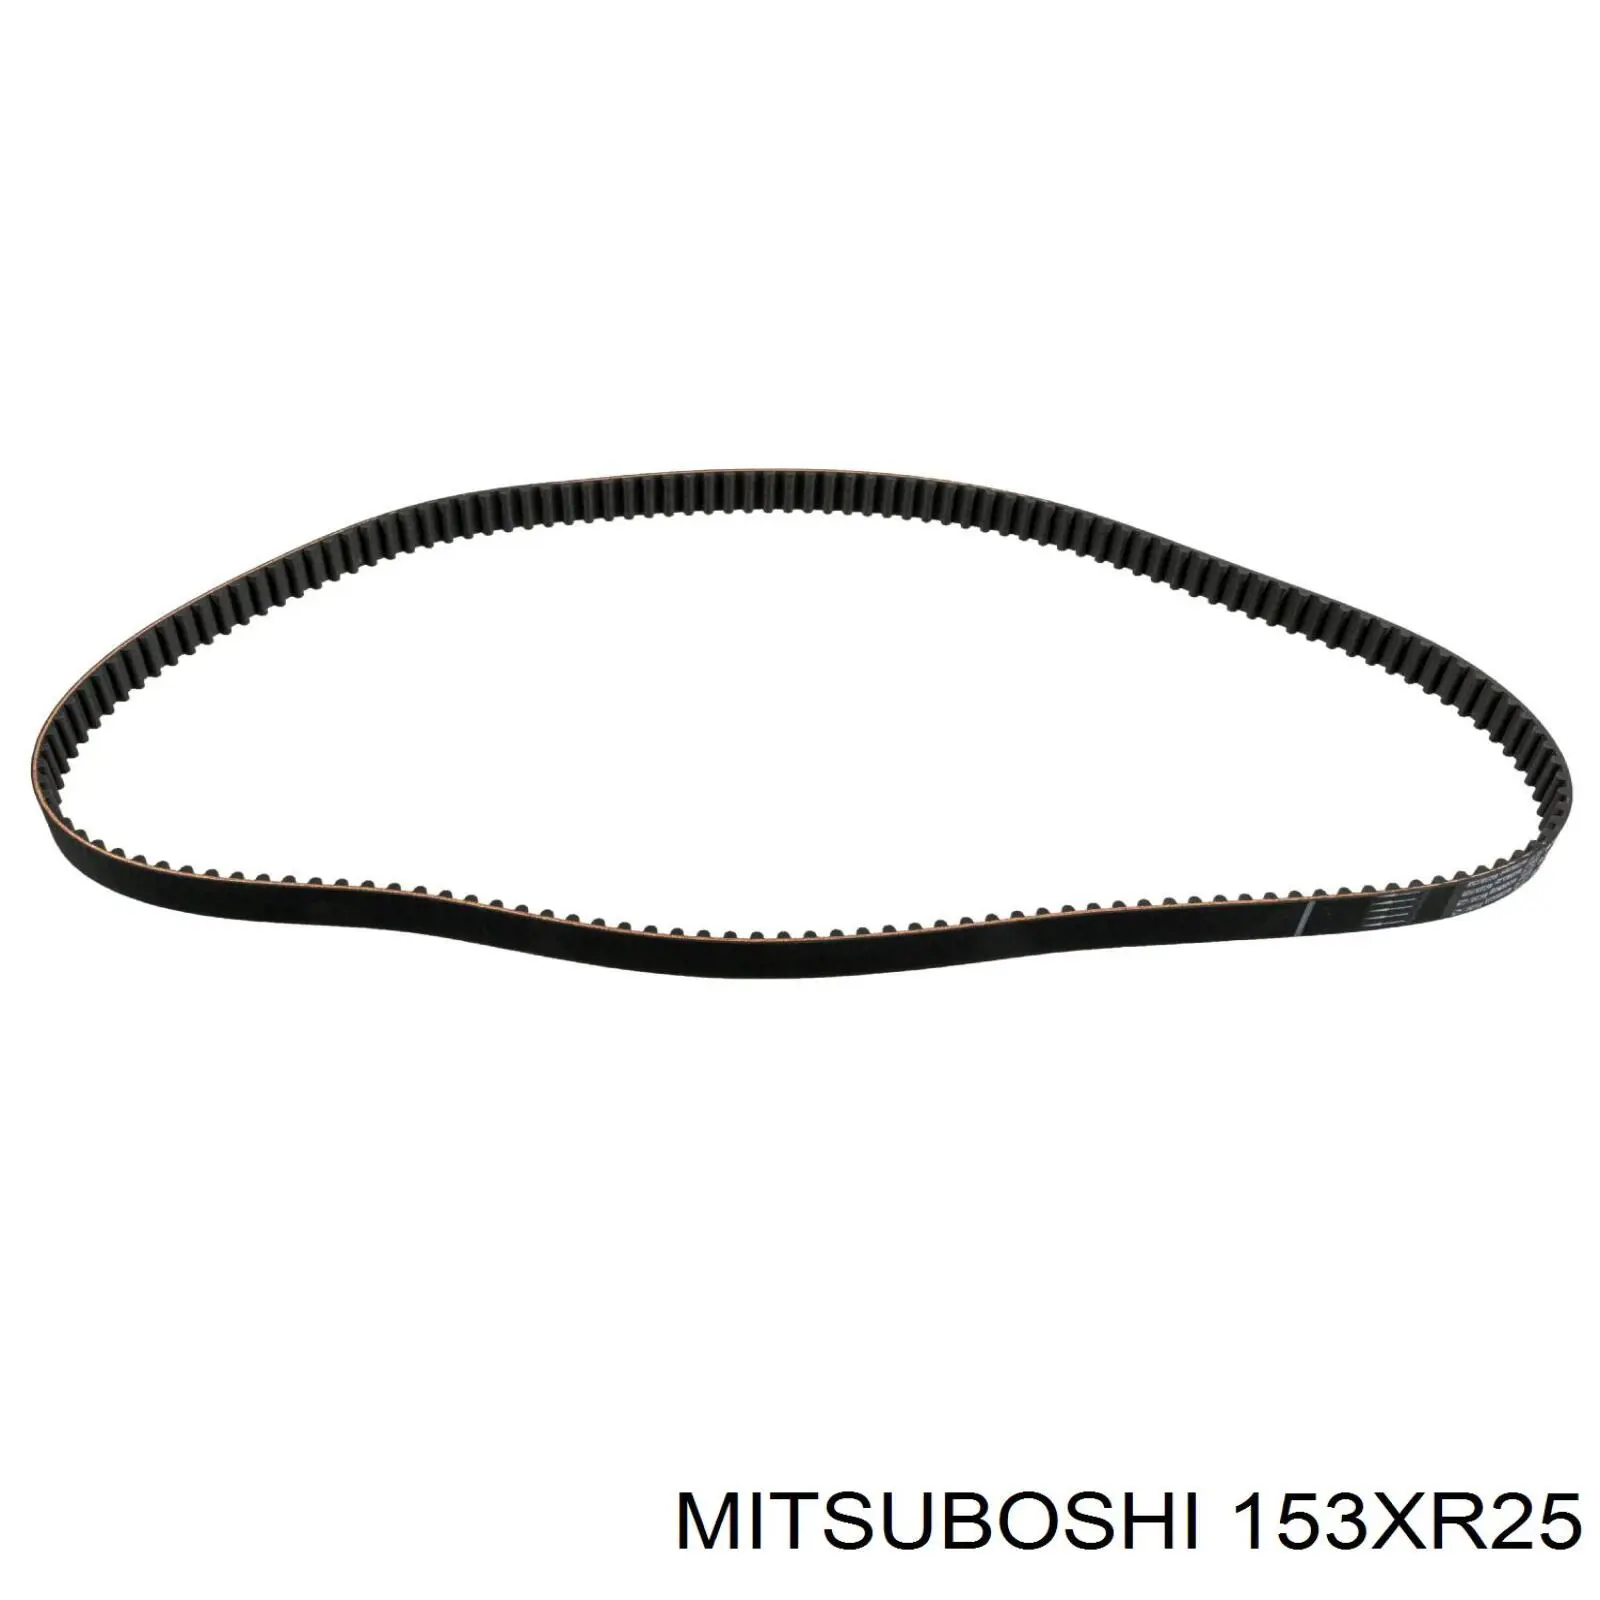 153XR25 Mitsuboshi ремень грм